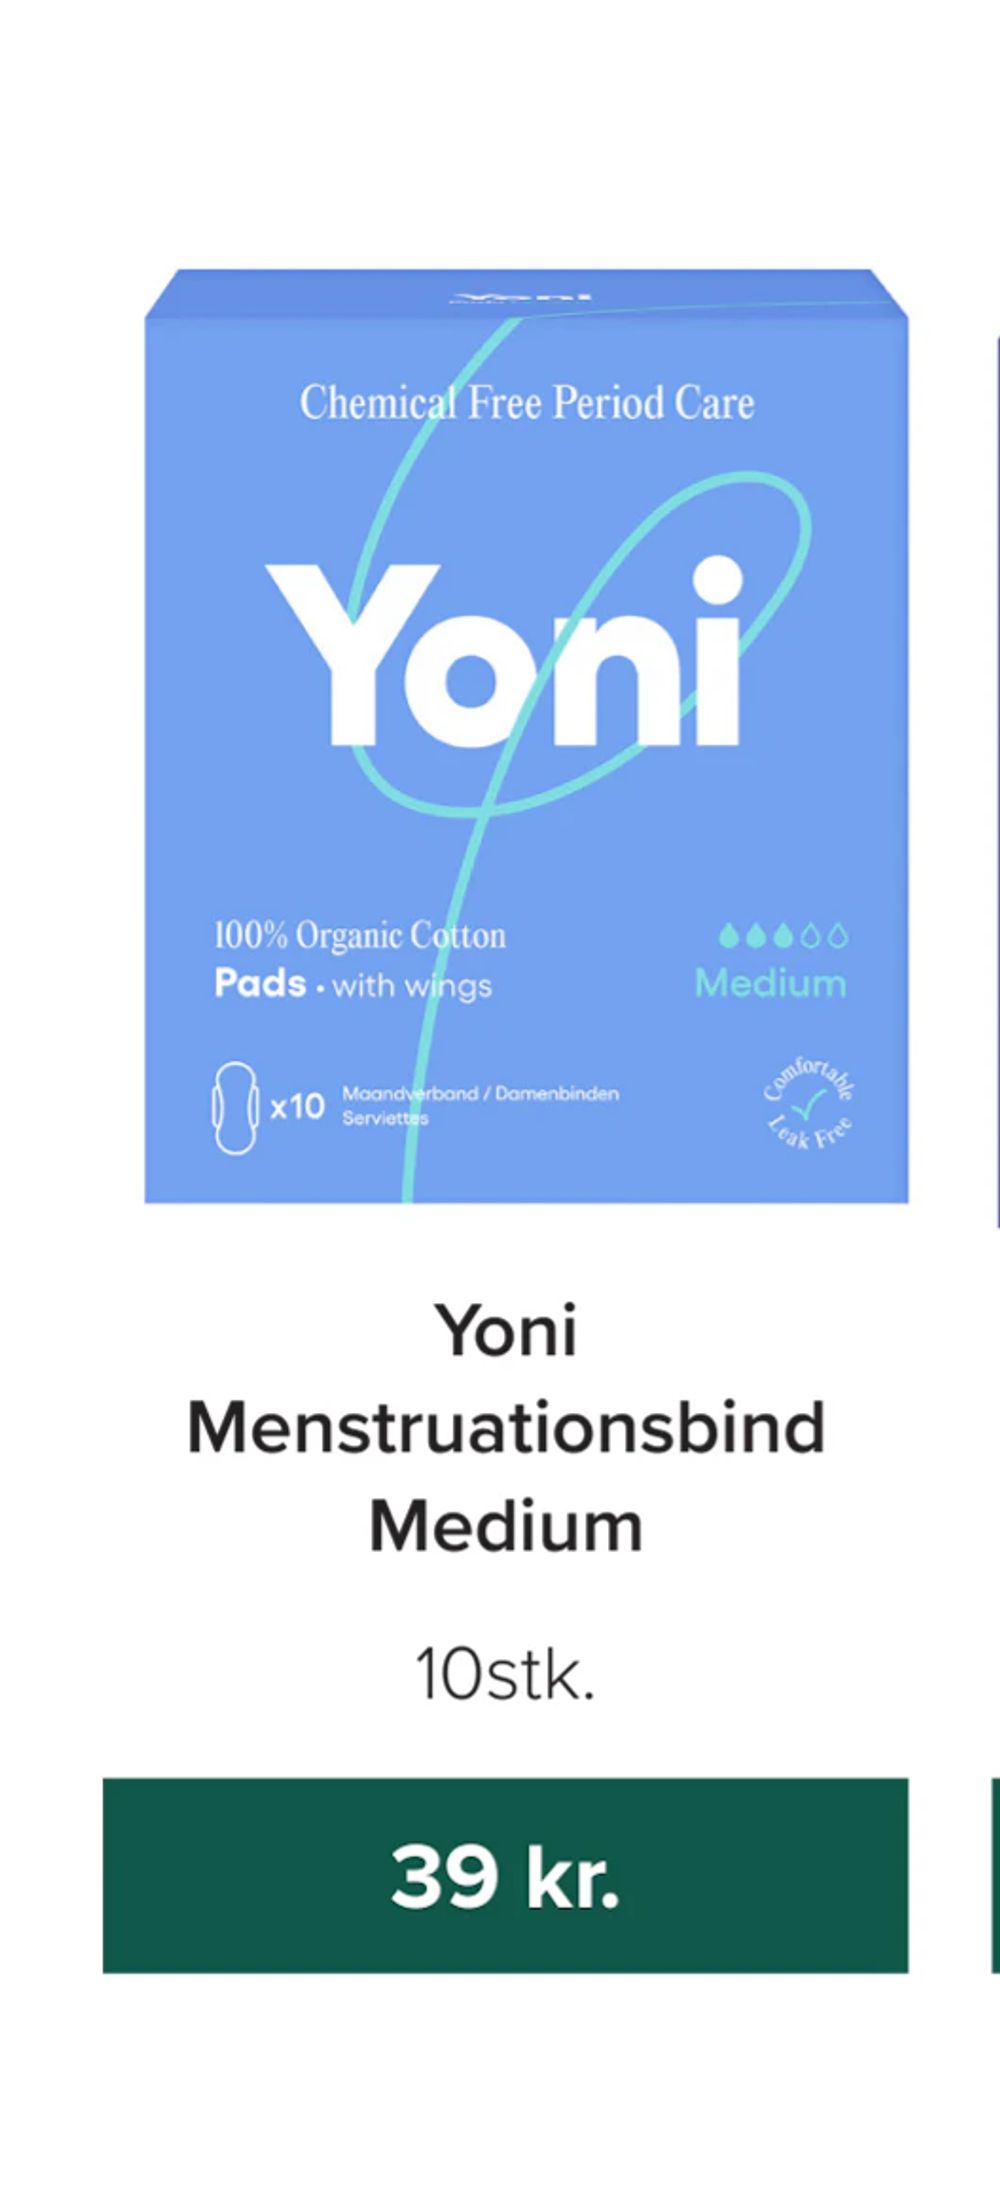 Tilbud på Yoni Menstruationsbind Medium fra Helsemin til 39 kr.